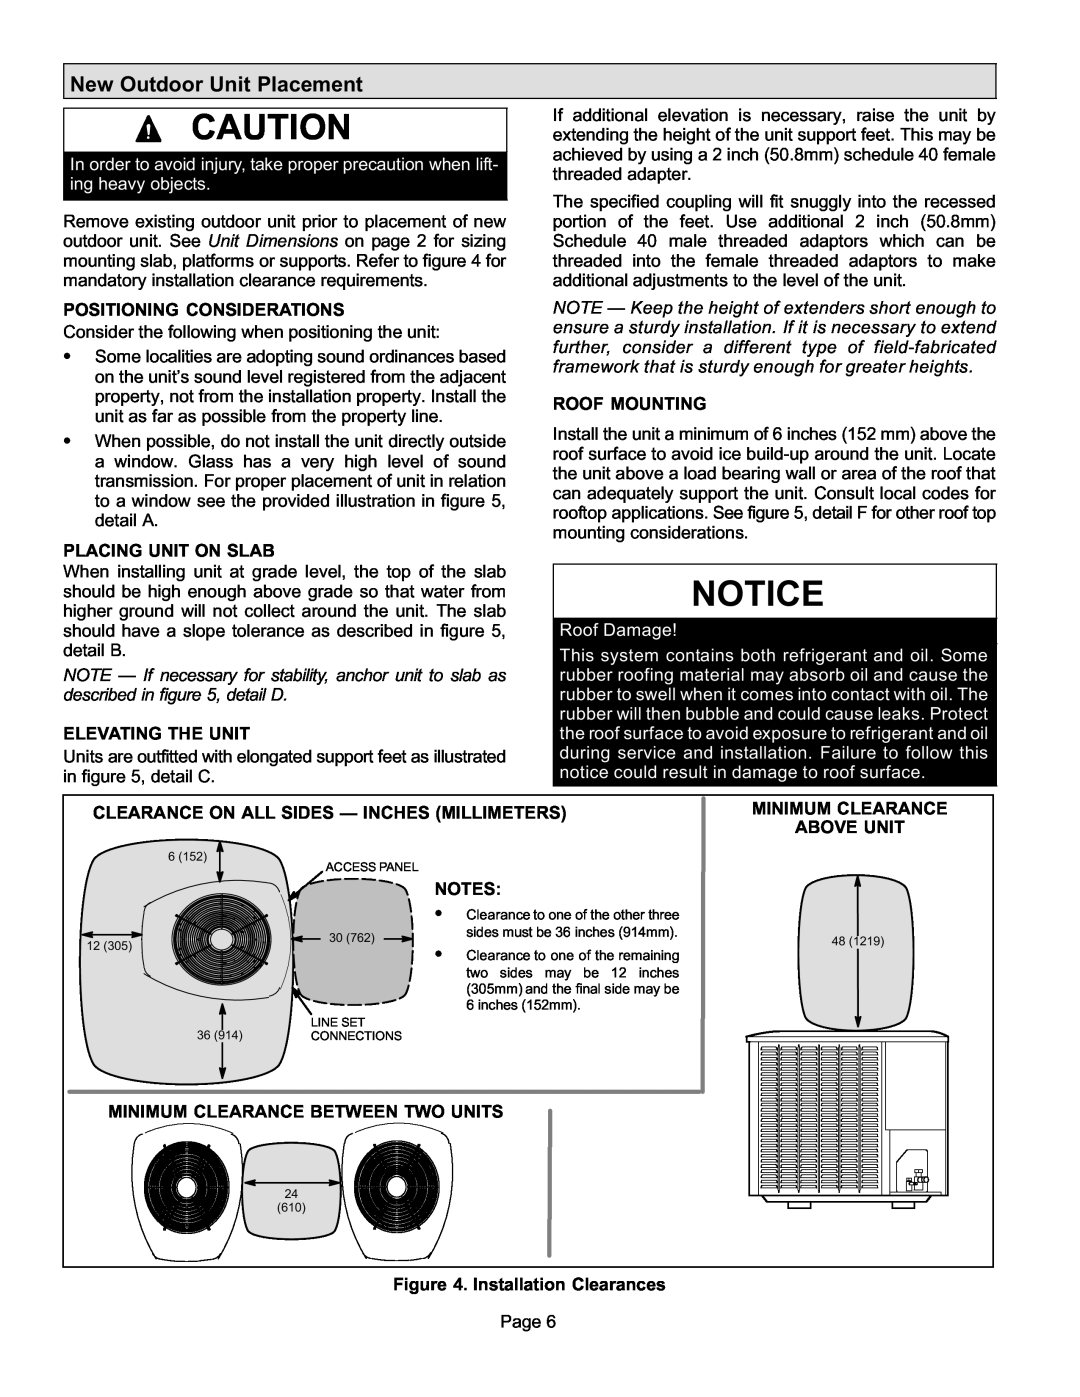 Lenox P506640-01, Elite Series XP16 Units Heat Pumps installation instructions New Outdoor Unit Placement 